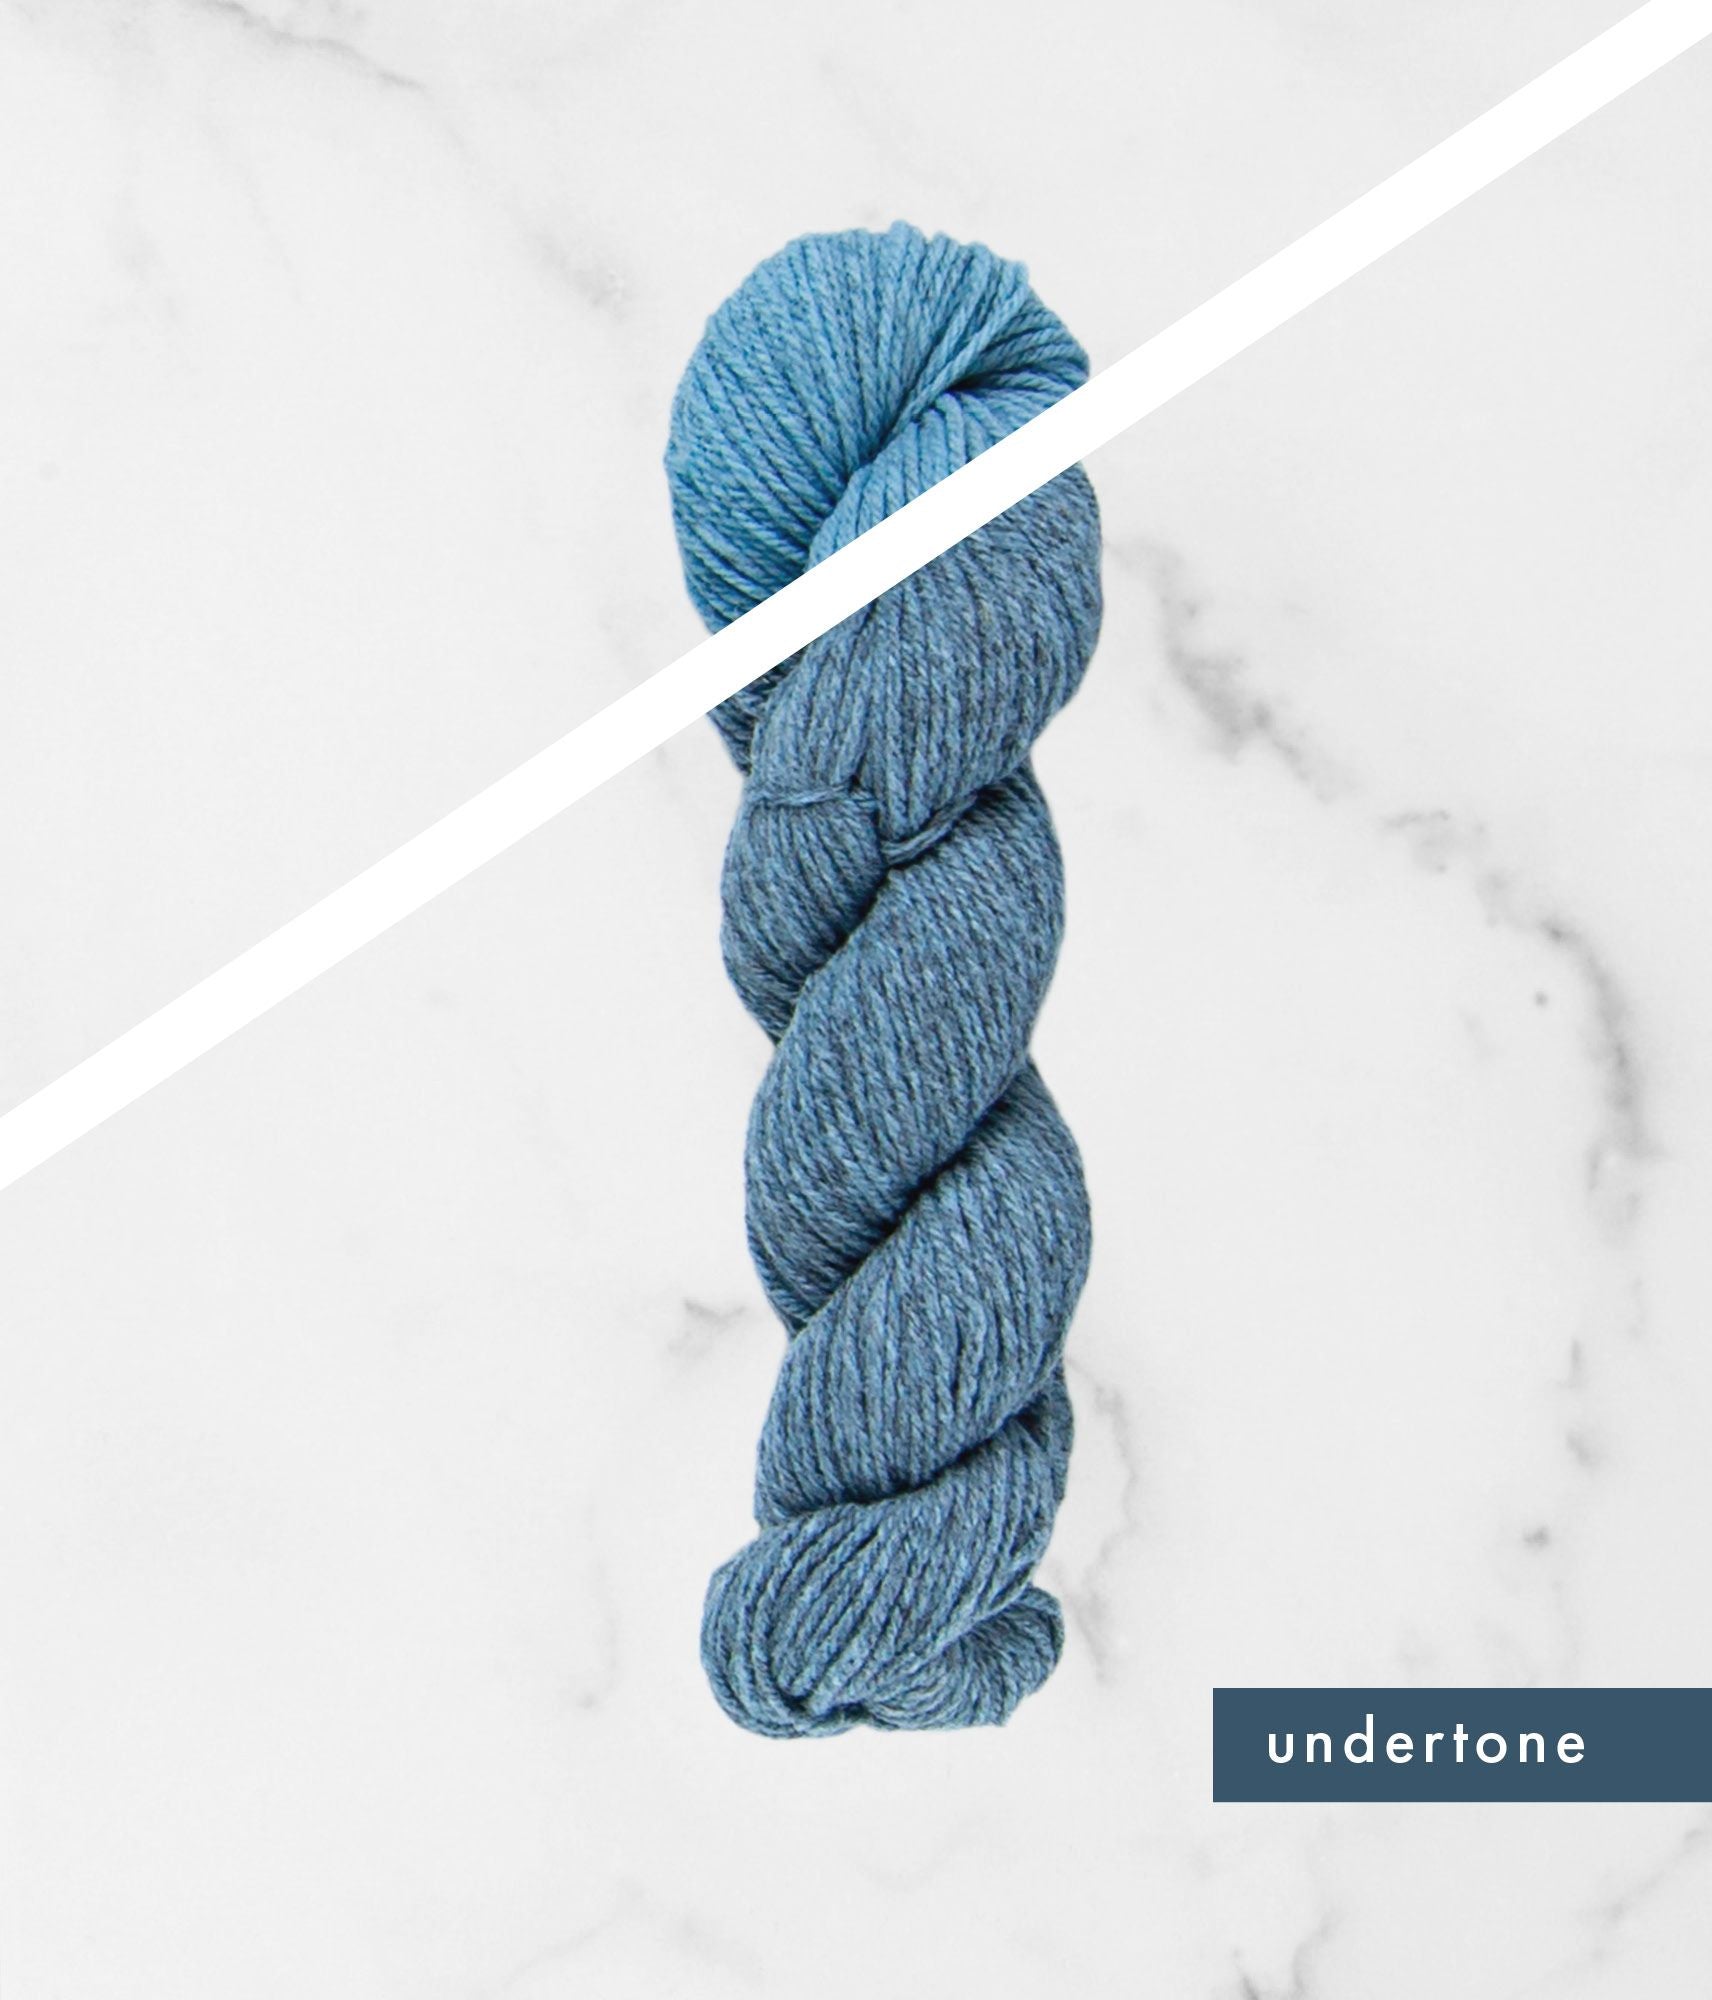 Blue overtone and undertone BT Tones hanks of yarn